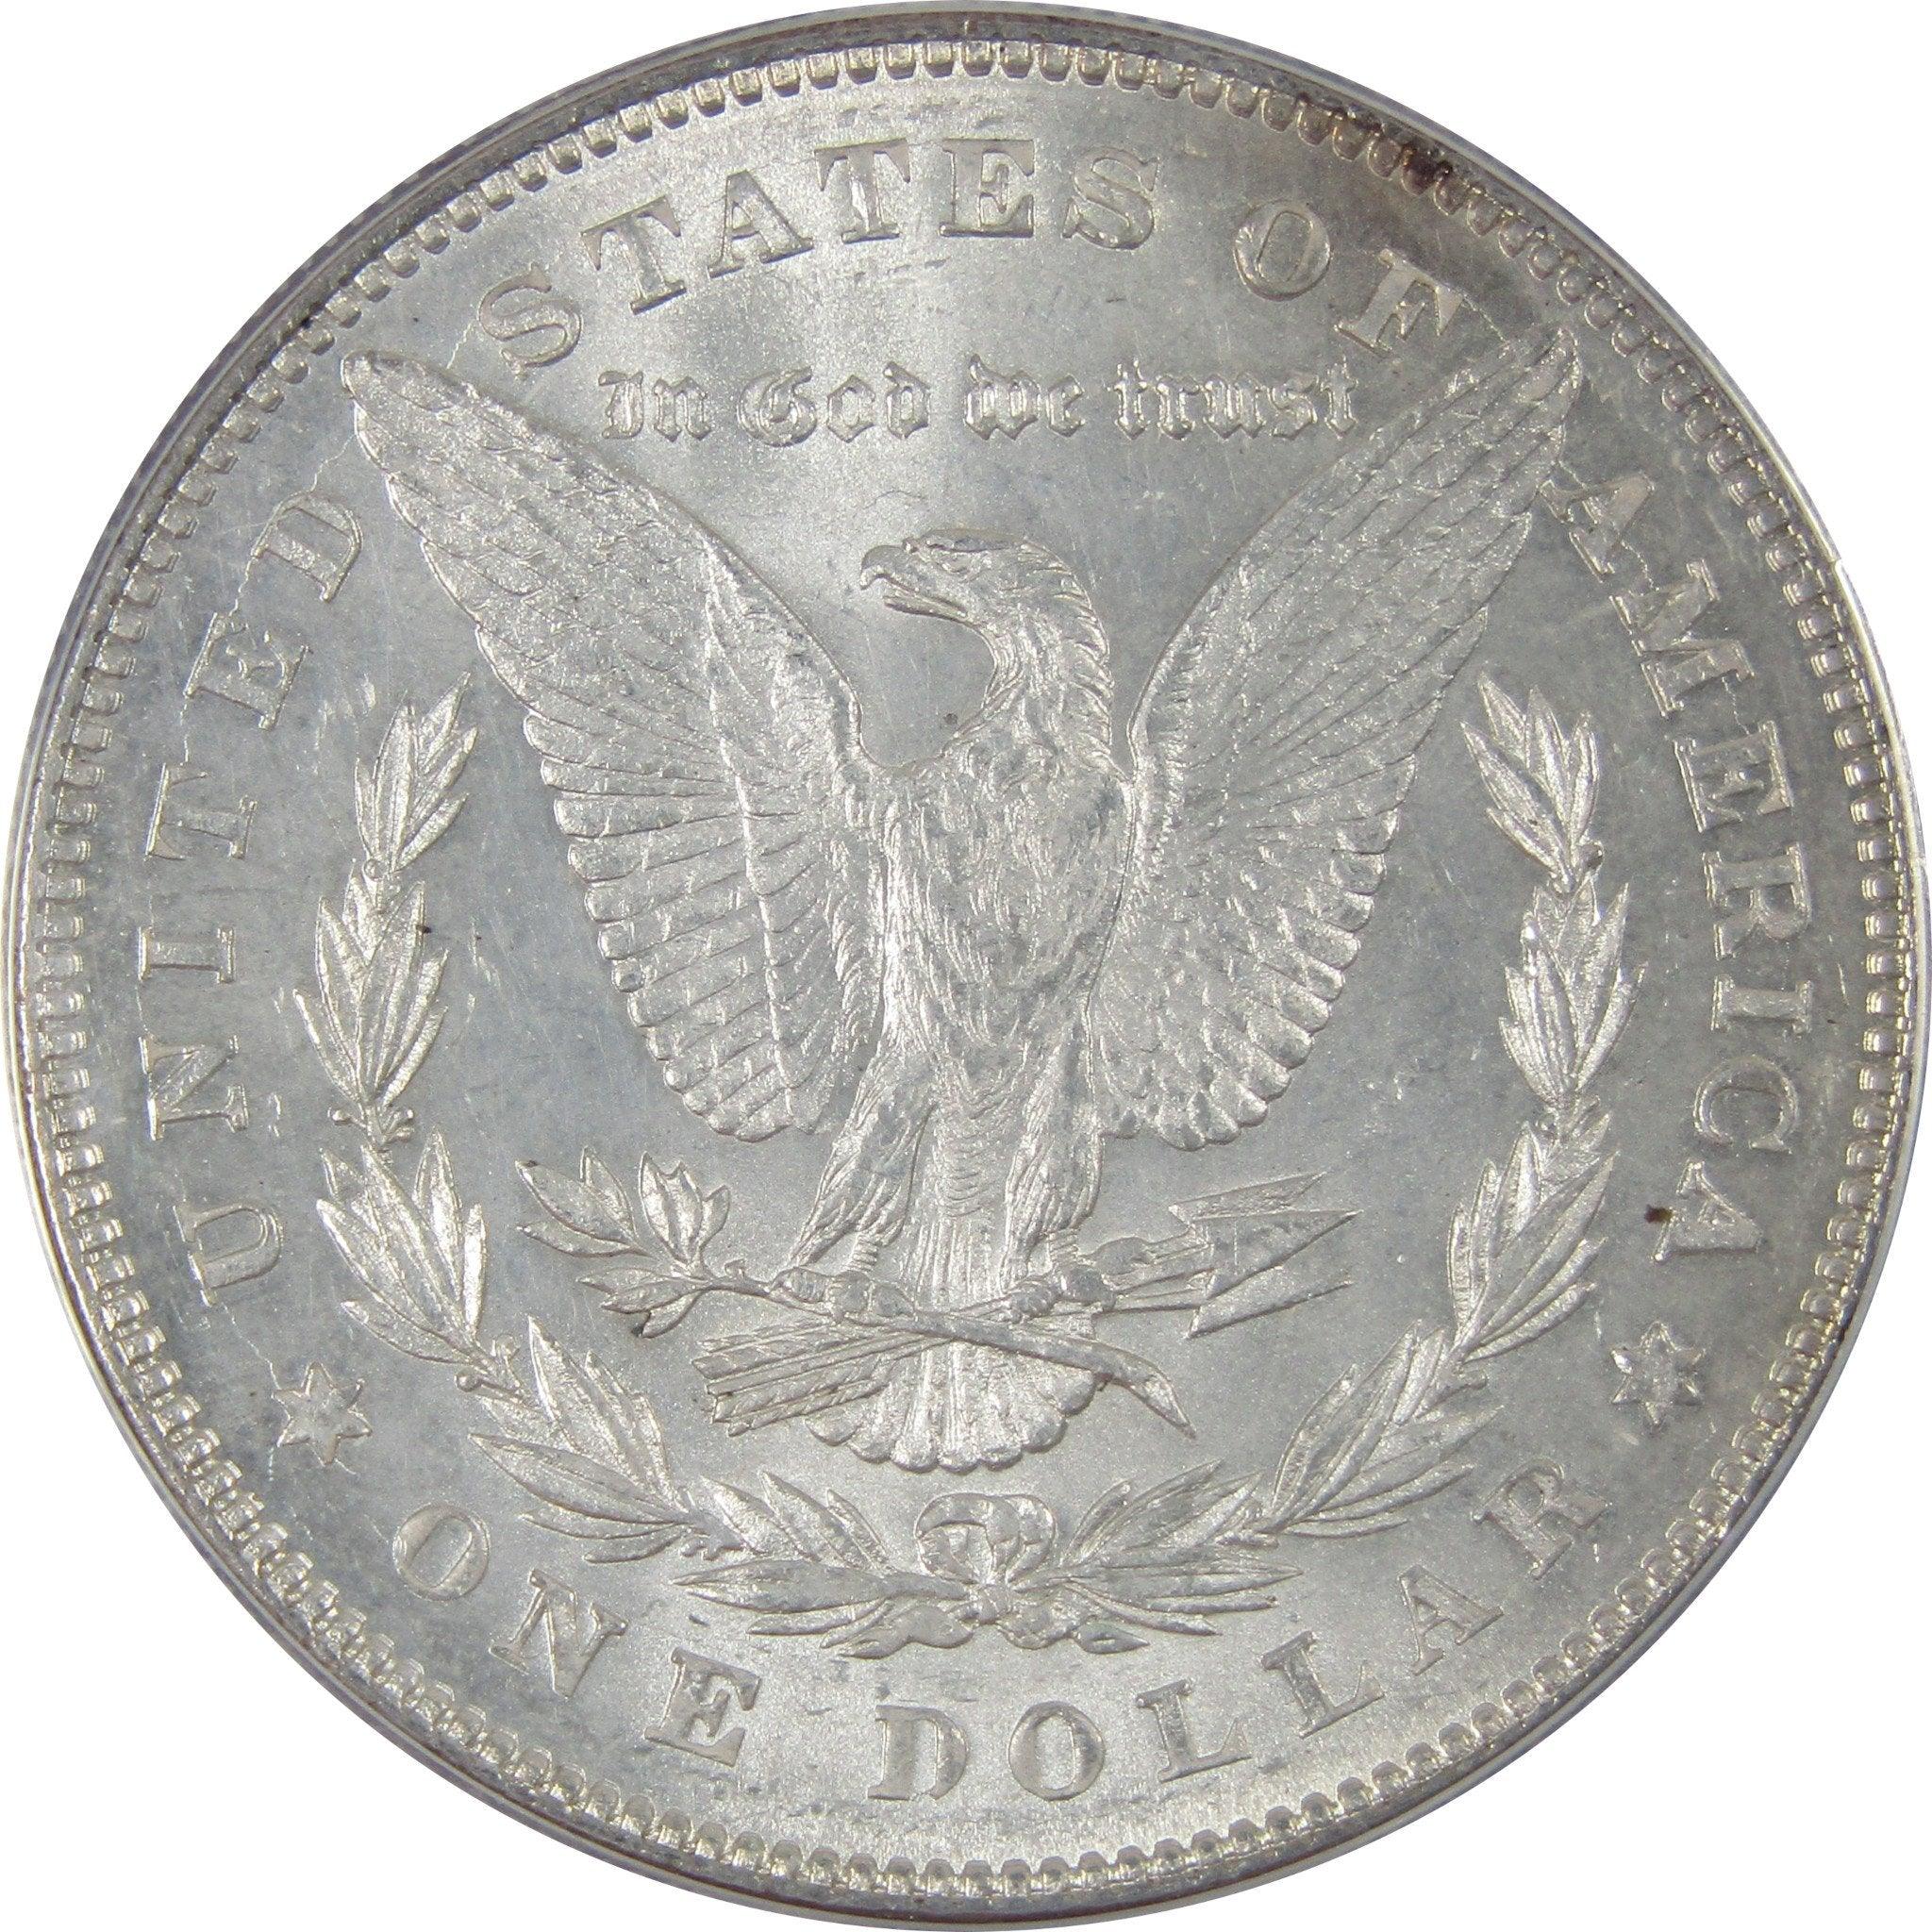 1878 7TF Rev 78 Morgan Dollar MS 61 ANACS Silver SKU:CPC1133 - Morgan coin - Morgan silver dollar - Morgan silver dollar for sale - Profile Coins &amp; Collectibles